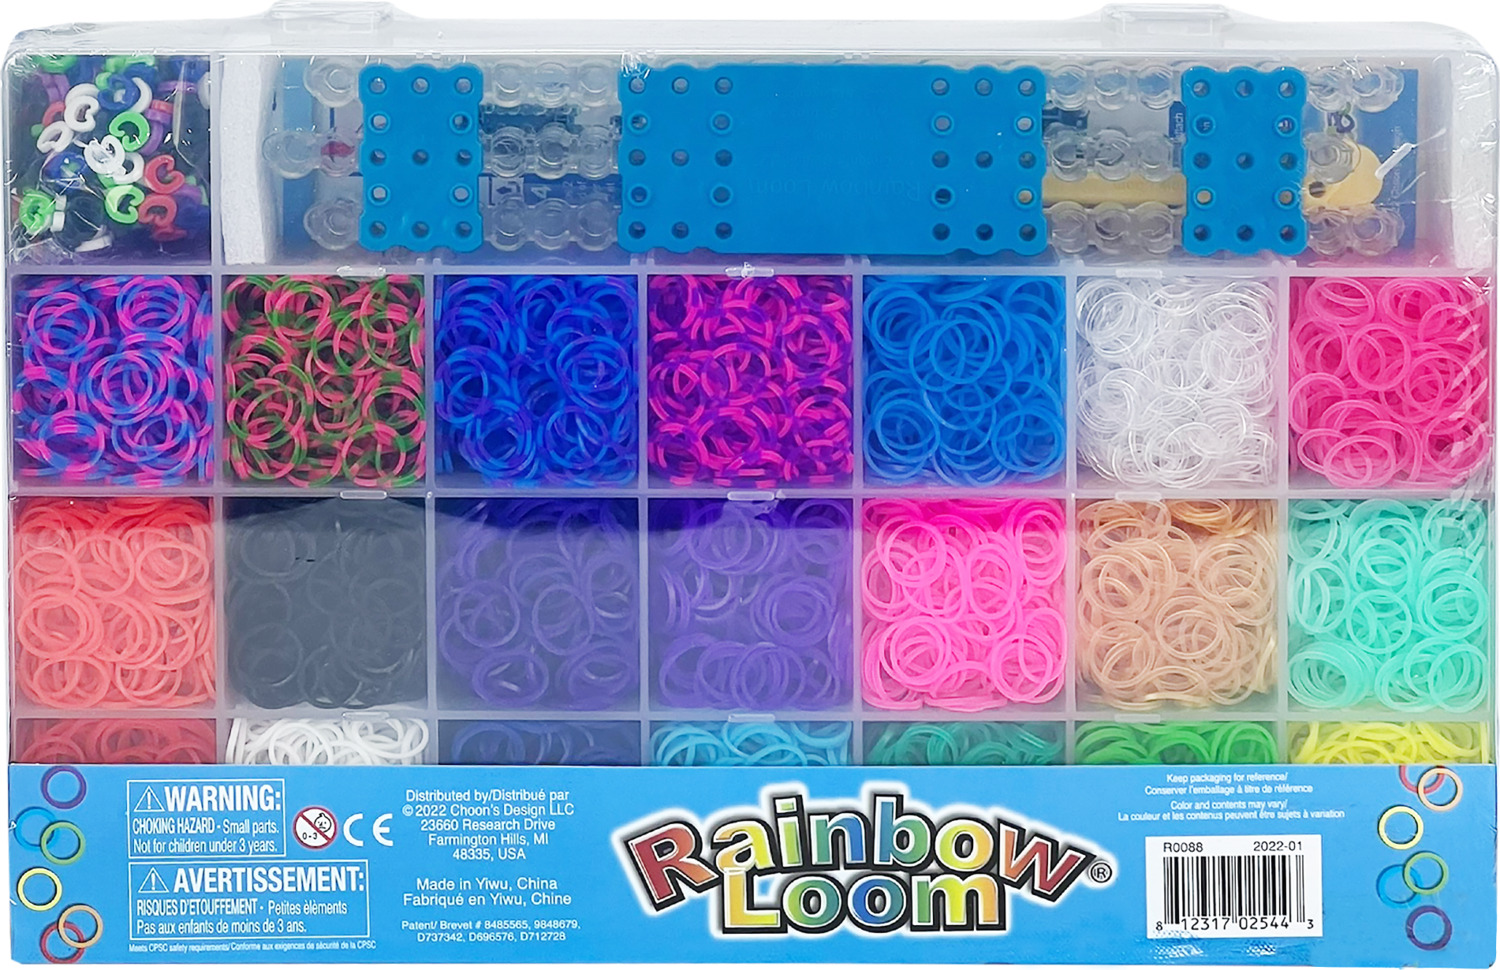 Rainbow Loom Mega Tub - Includes 8,000 Premium Latex-Free Rubberbands 